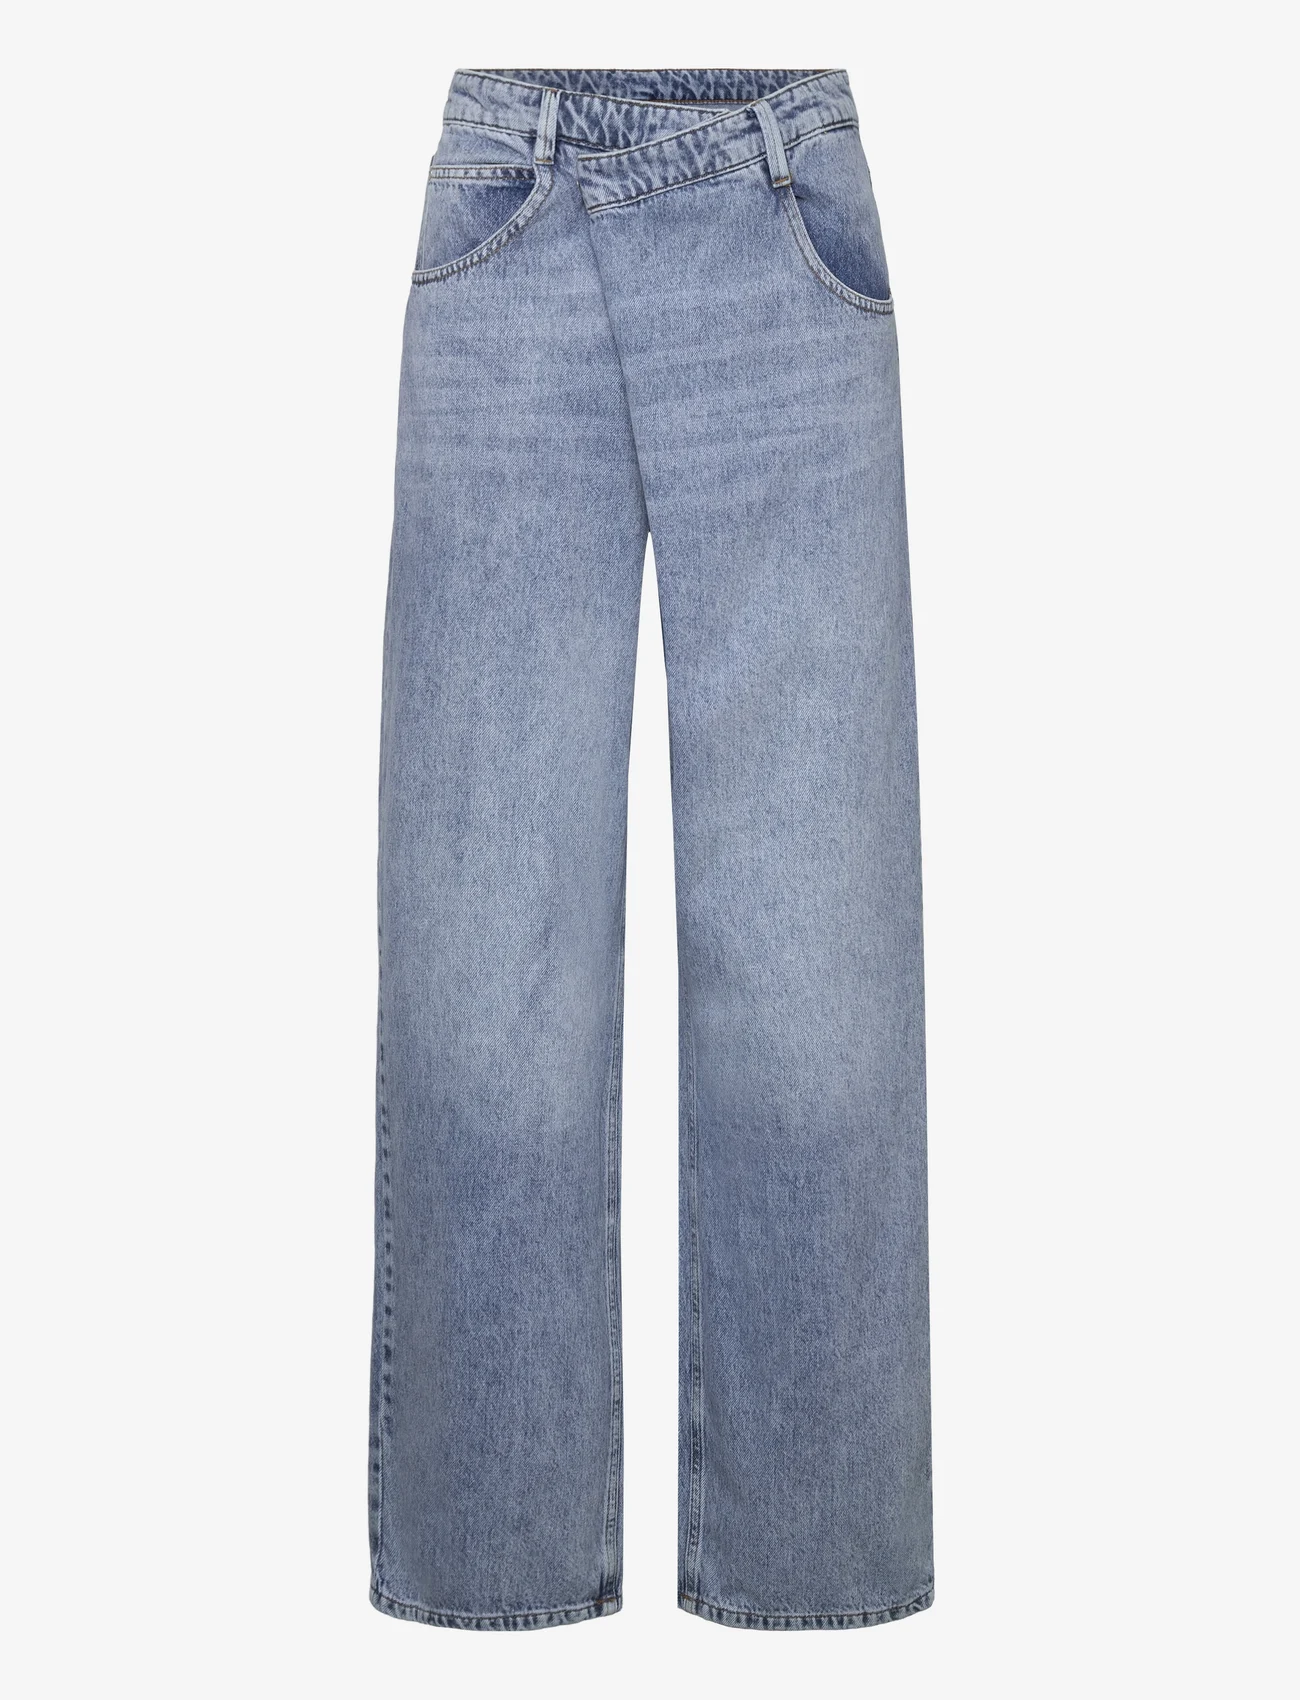 2NDDAY - 2ND Fennec TT - Ocean Blue Denim - jeans met wijde pijpen - light blue - 0